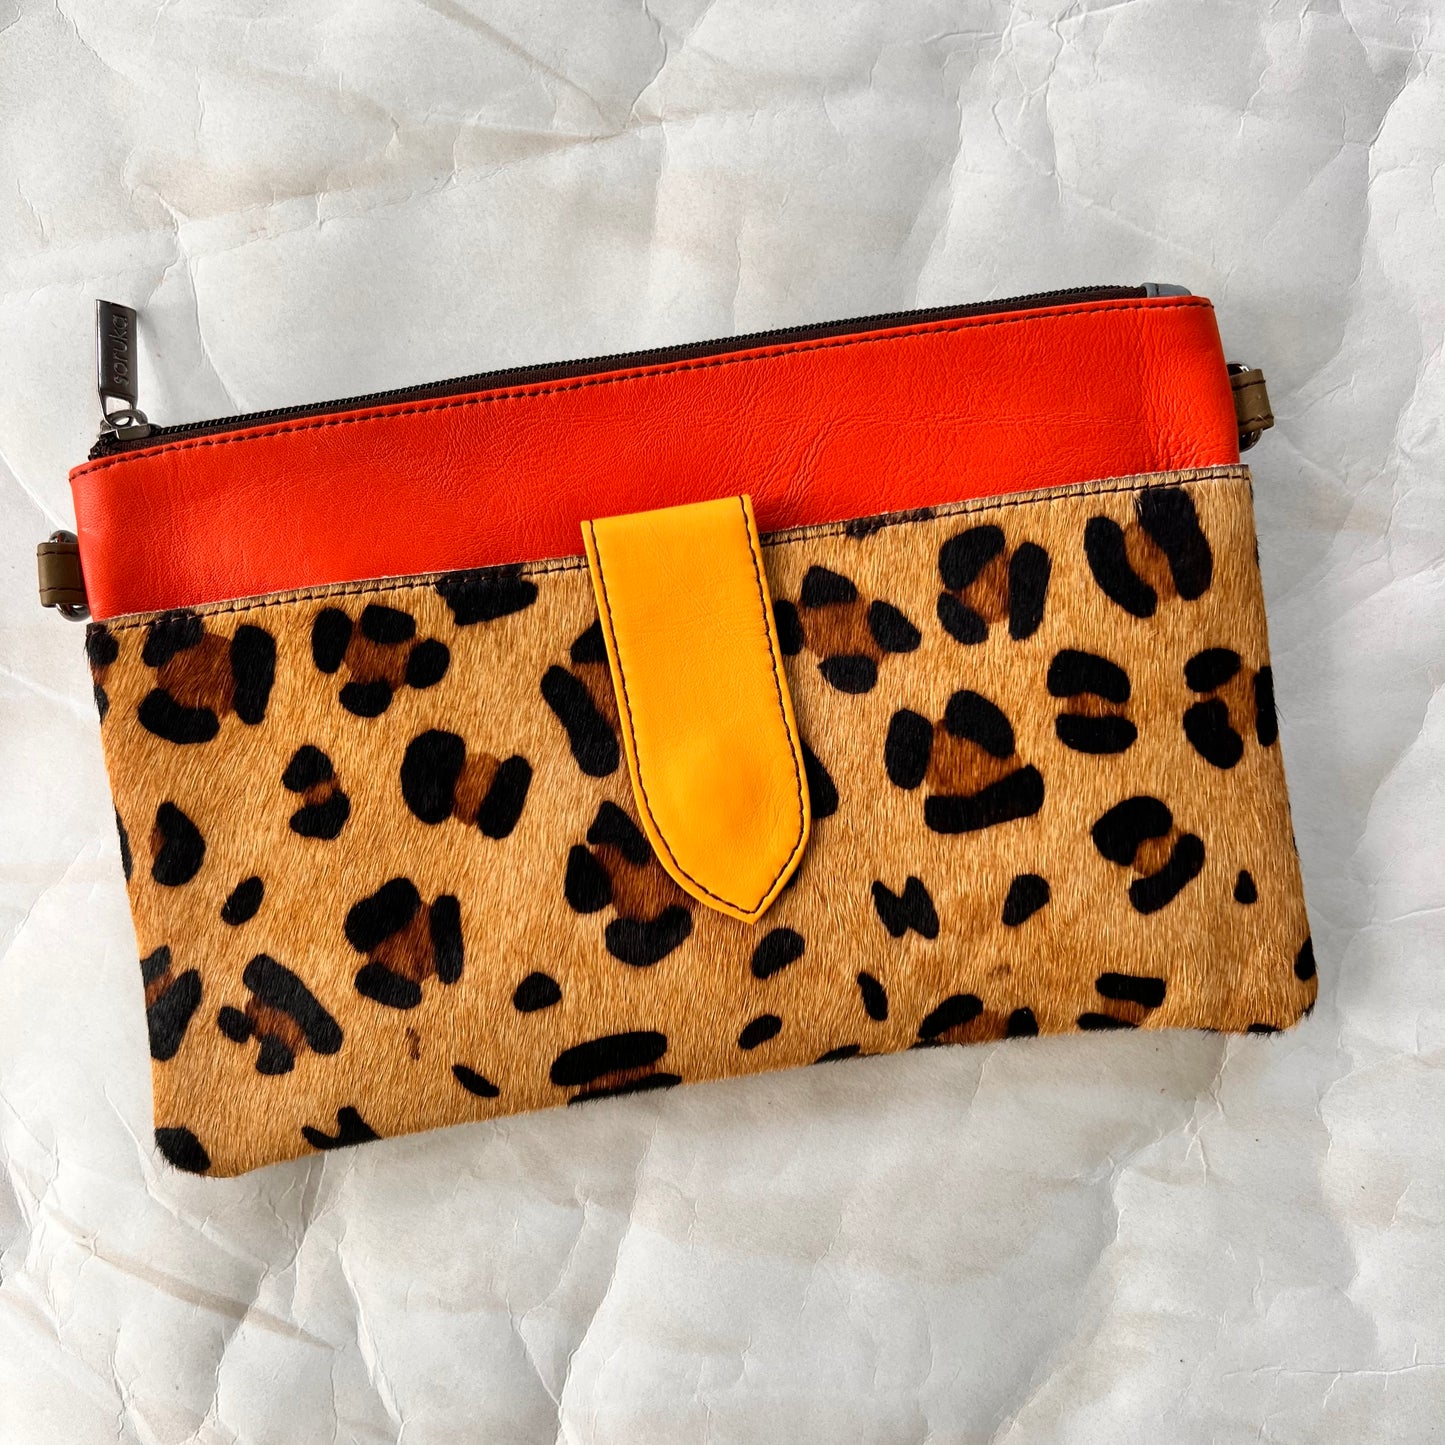 orange rectangular bag with cheetah print hair-on-hide pocket, and yellow tab.